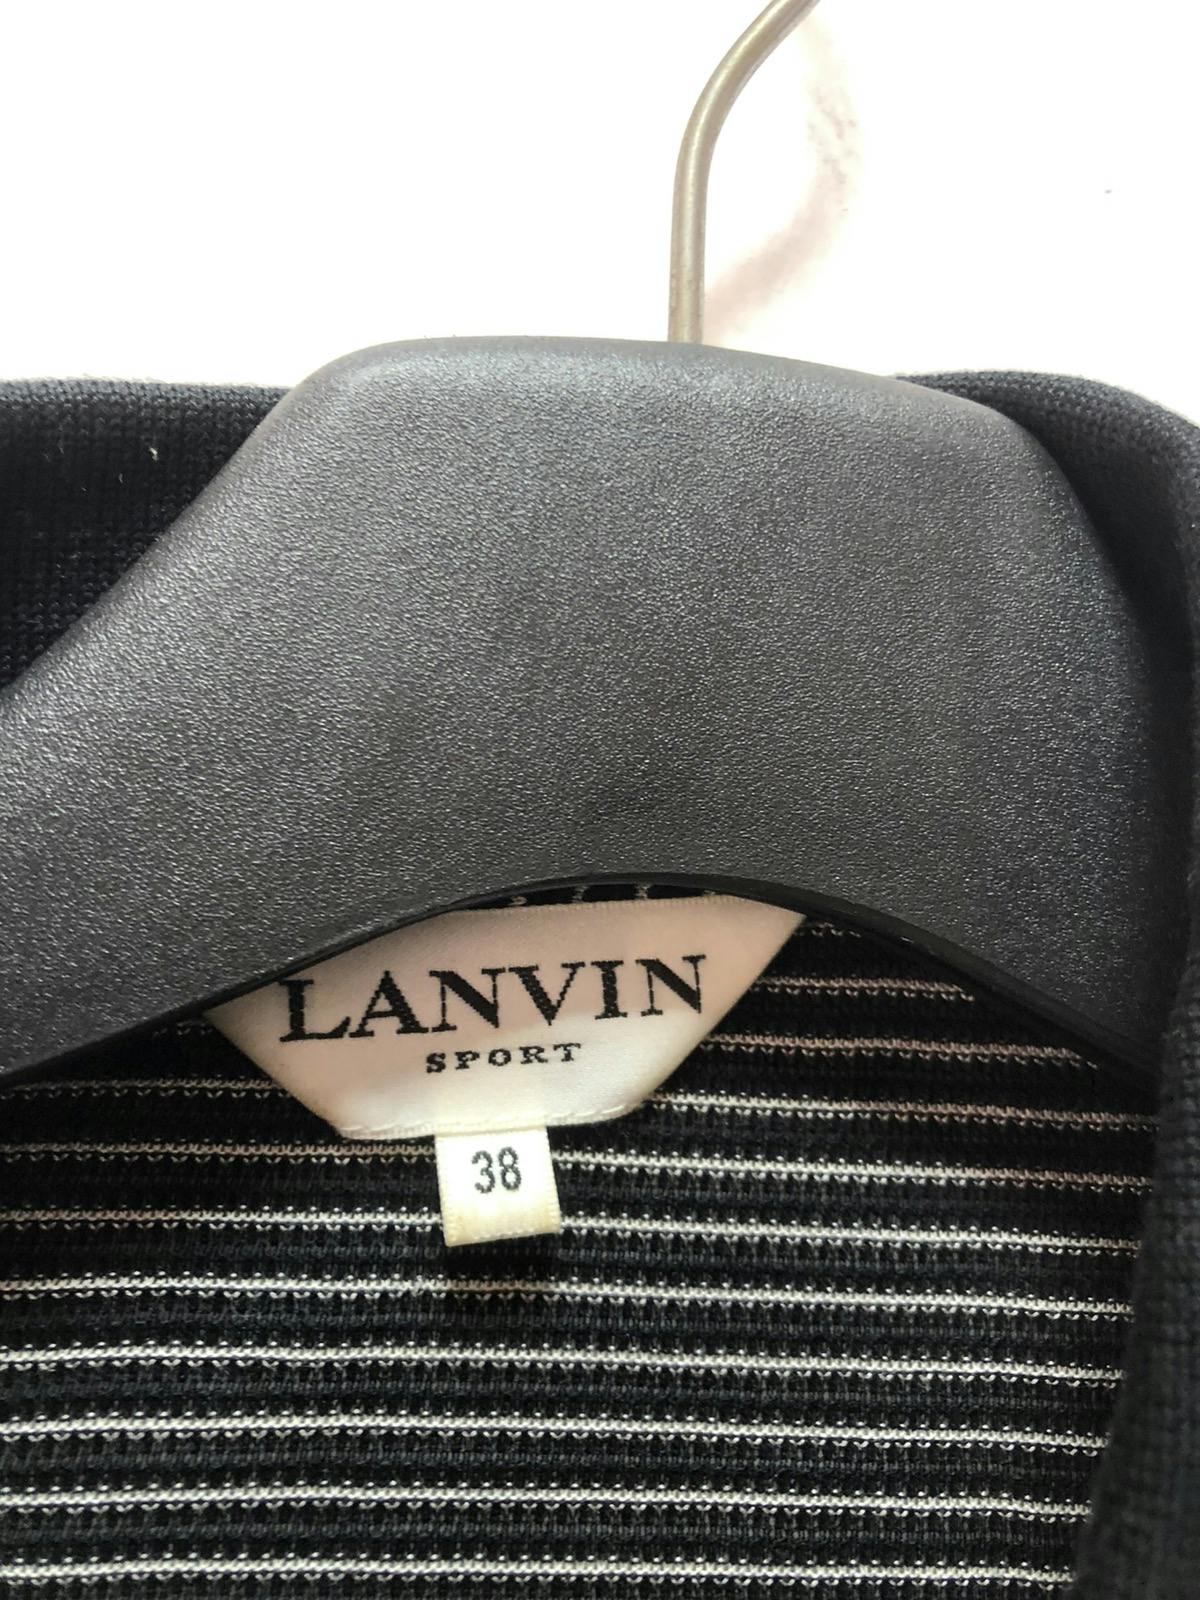 LANVIN Sport Polo Shirt Longsleeve - 2